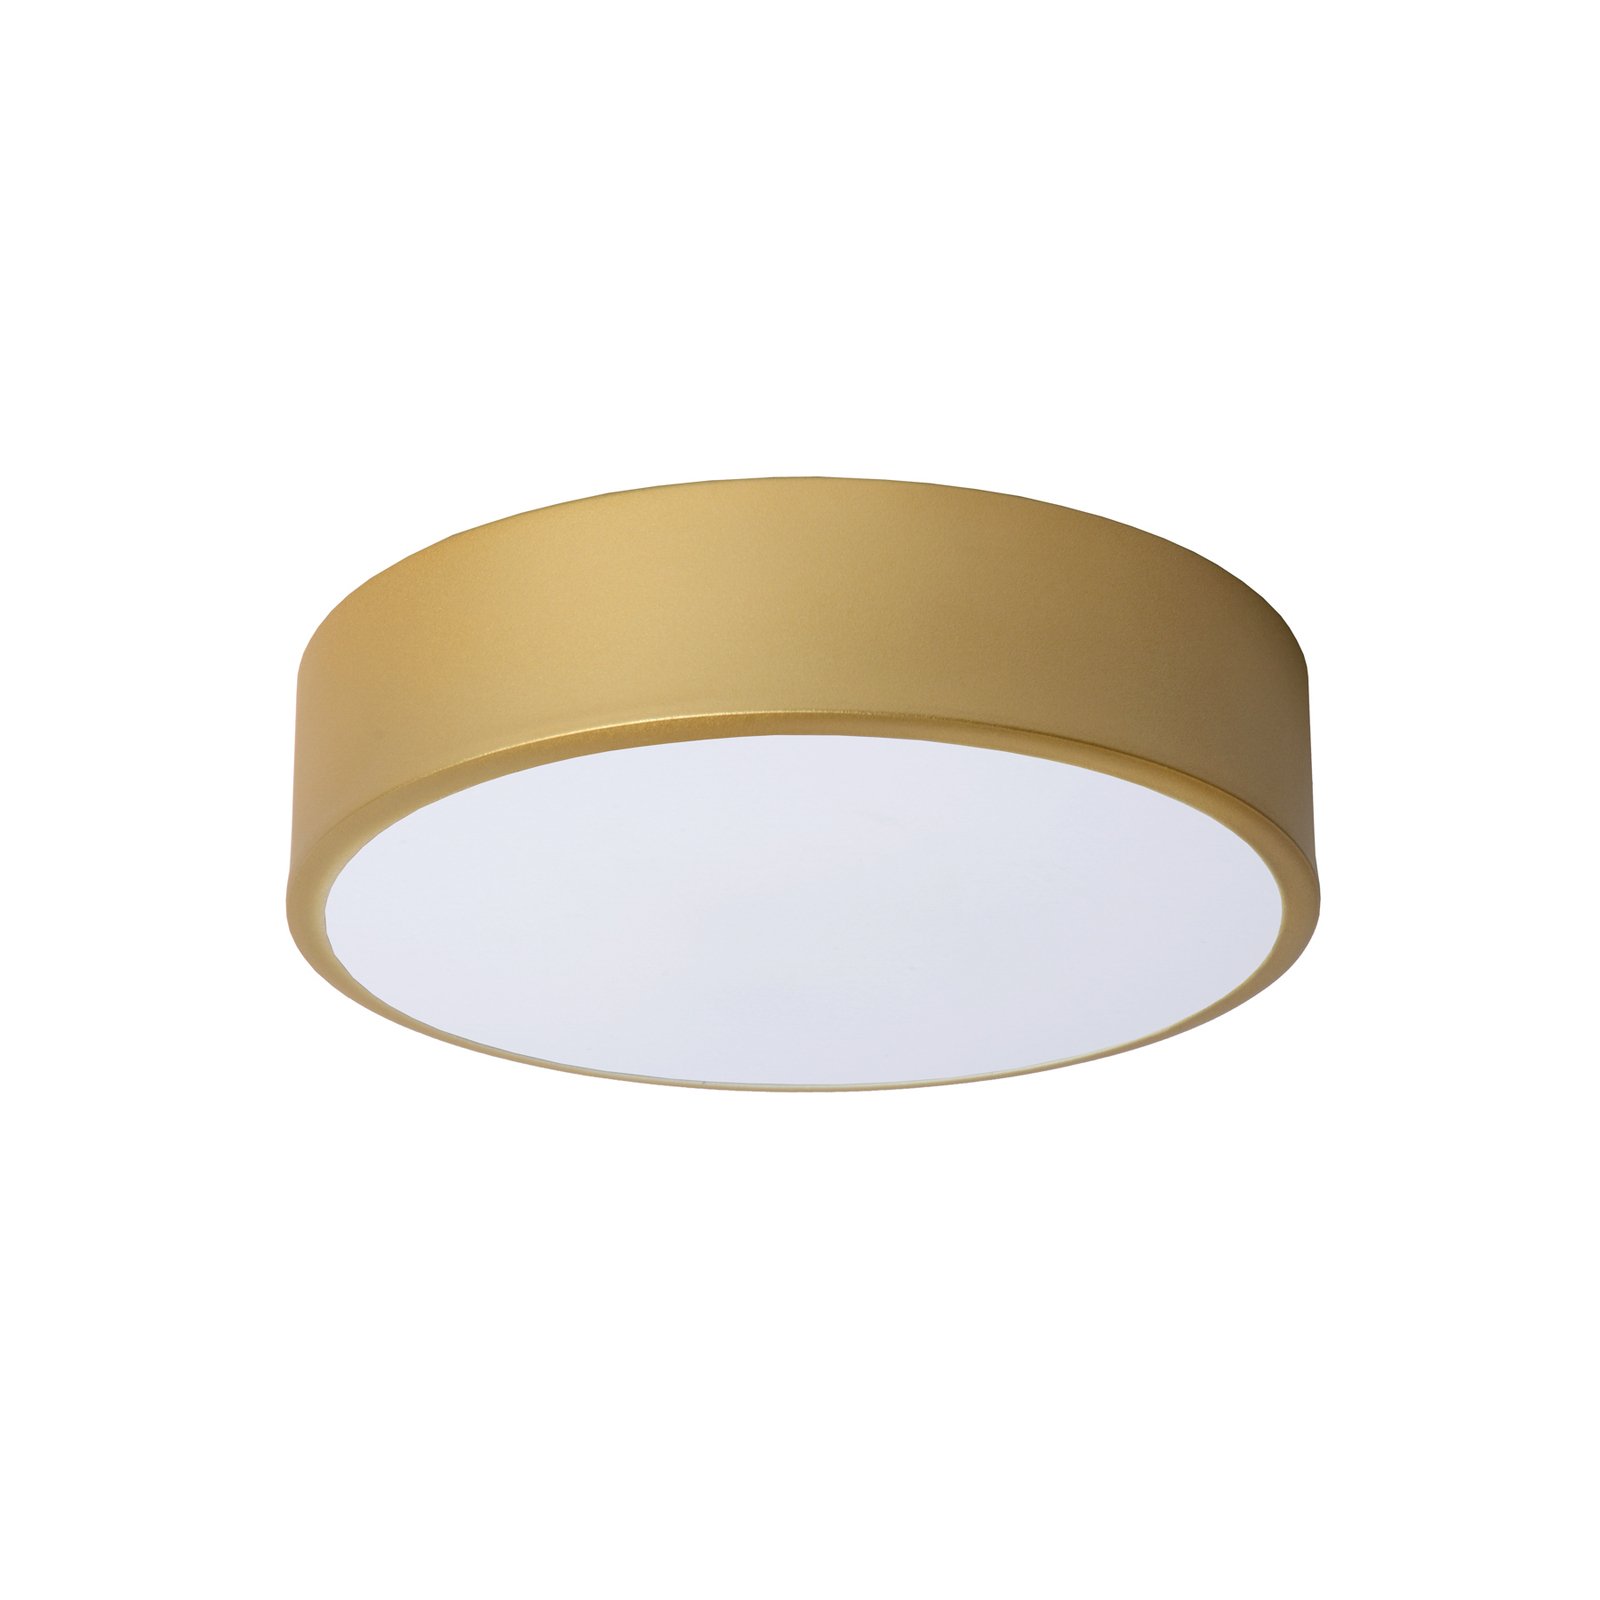 LED-loftslampe Unar, guld mat, Ø 20 cm